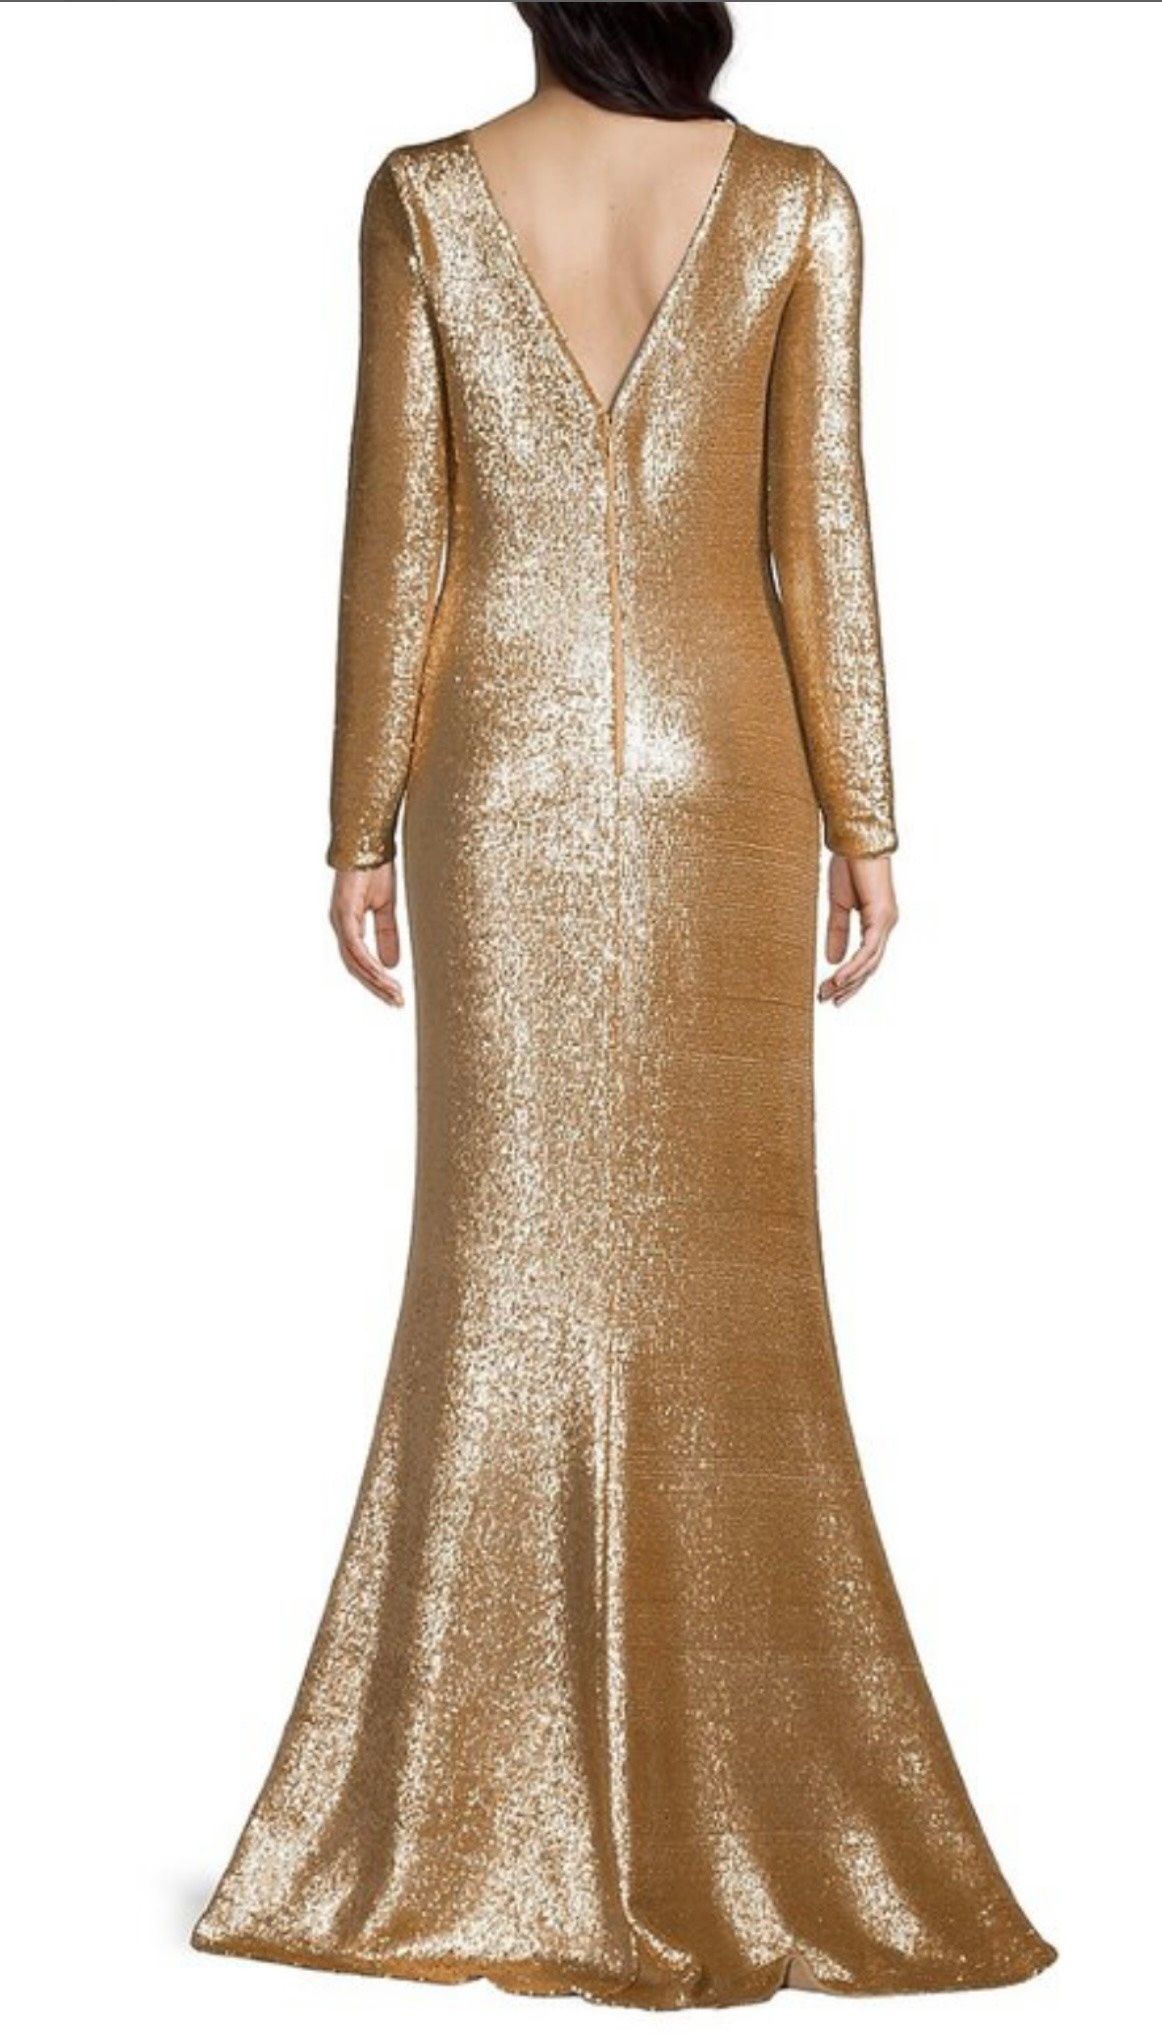 Donna Karan New York Size 10 Bridesmaid Gold Mermaid Dress on Queenly